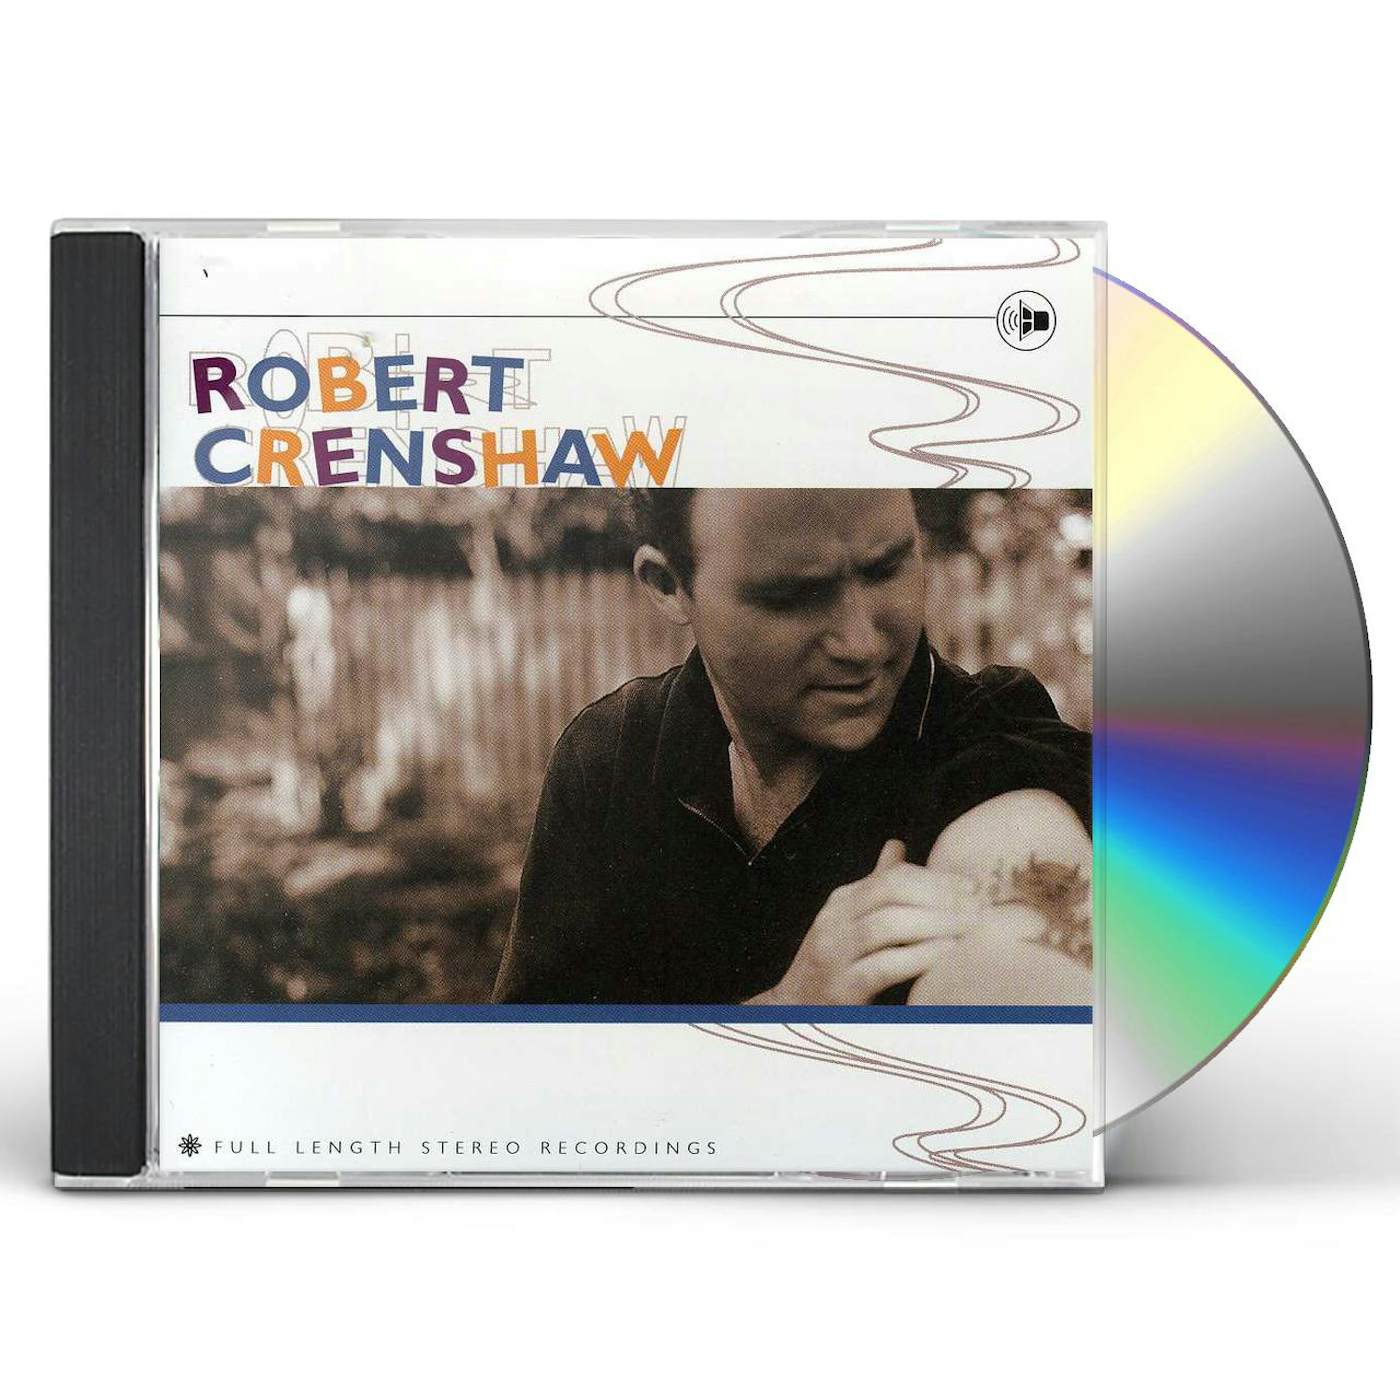 Robert Crenshaw FULL LENGTH STEREO RECORDINGS CD